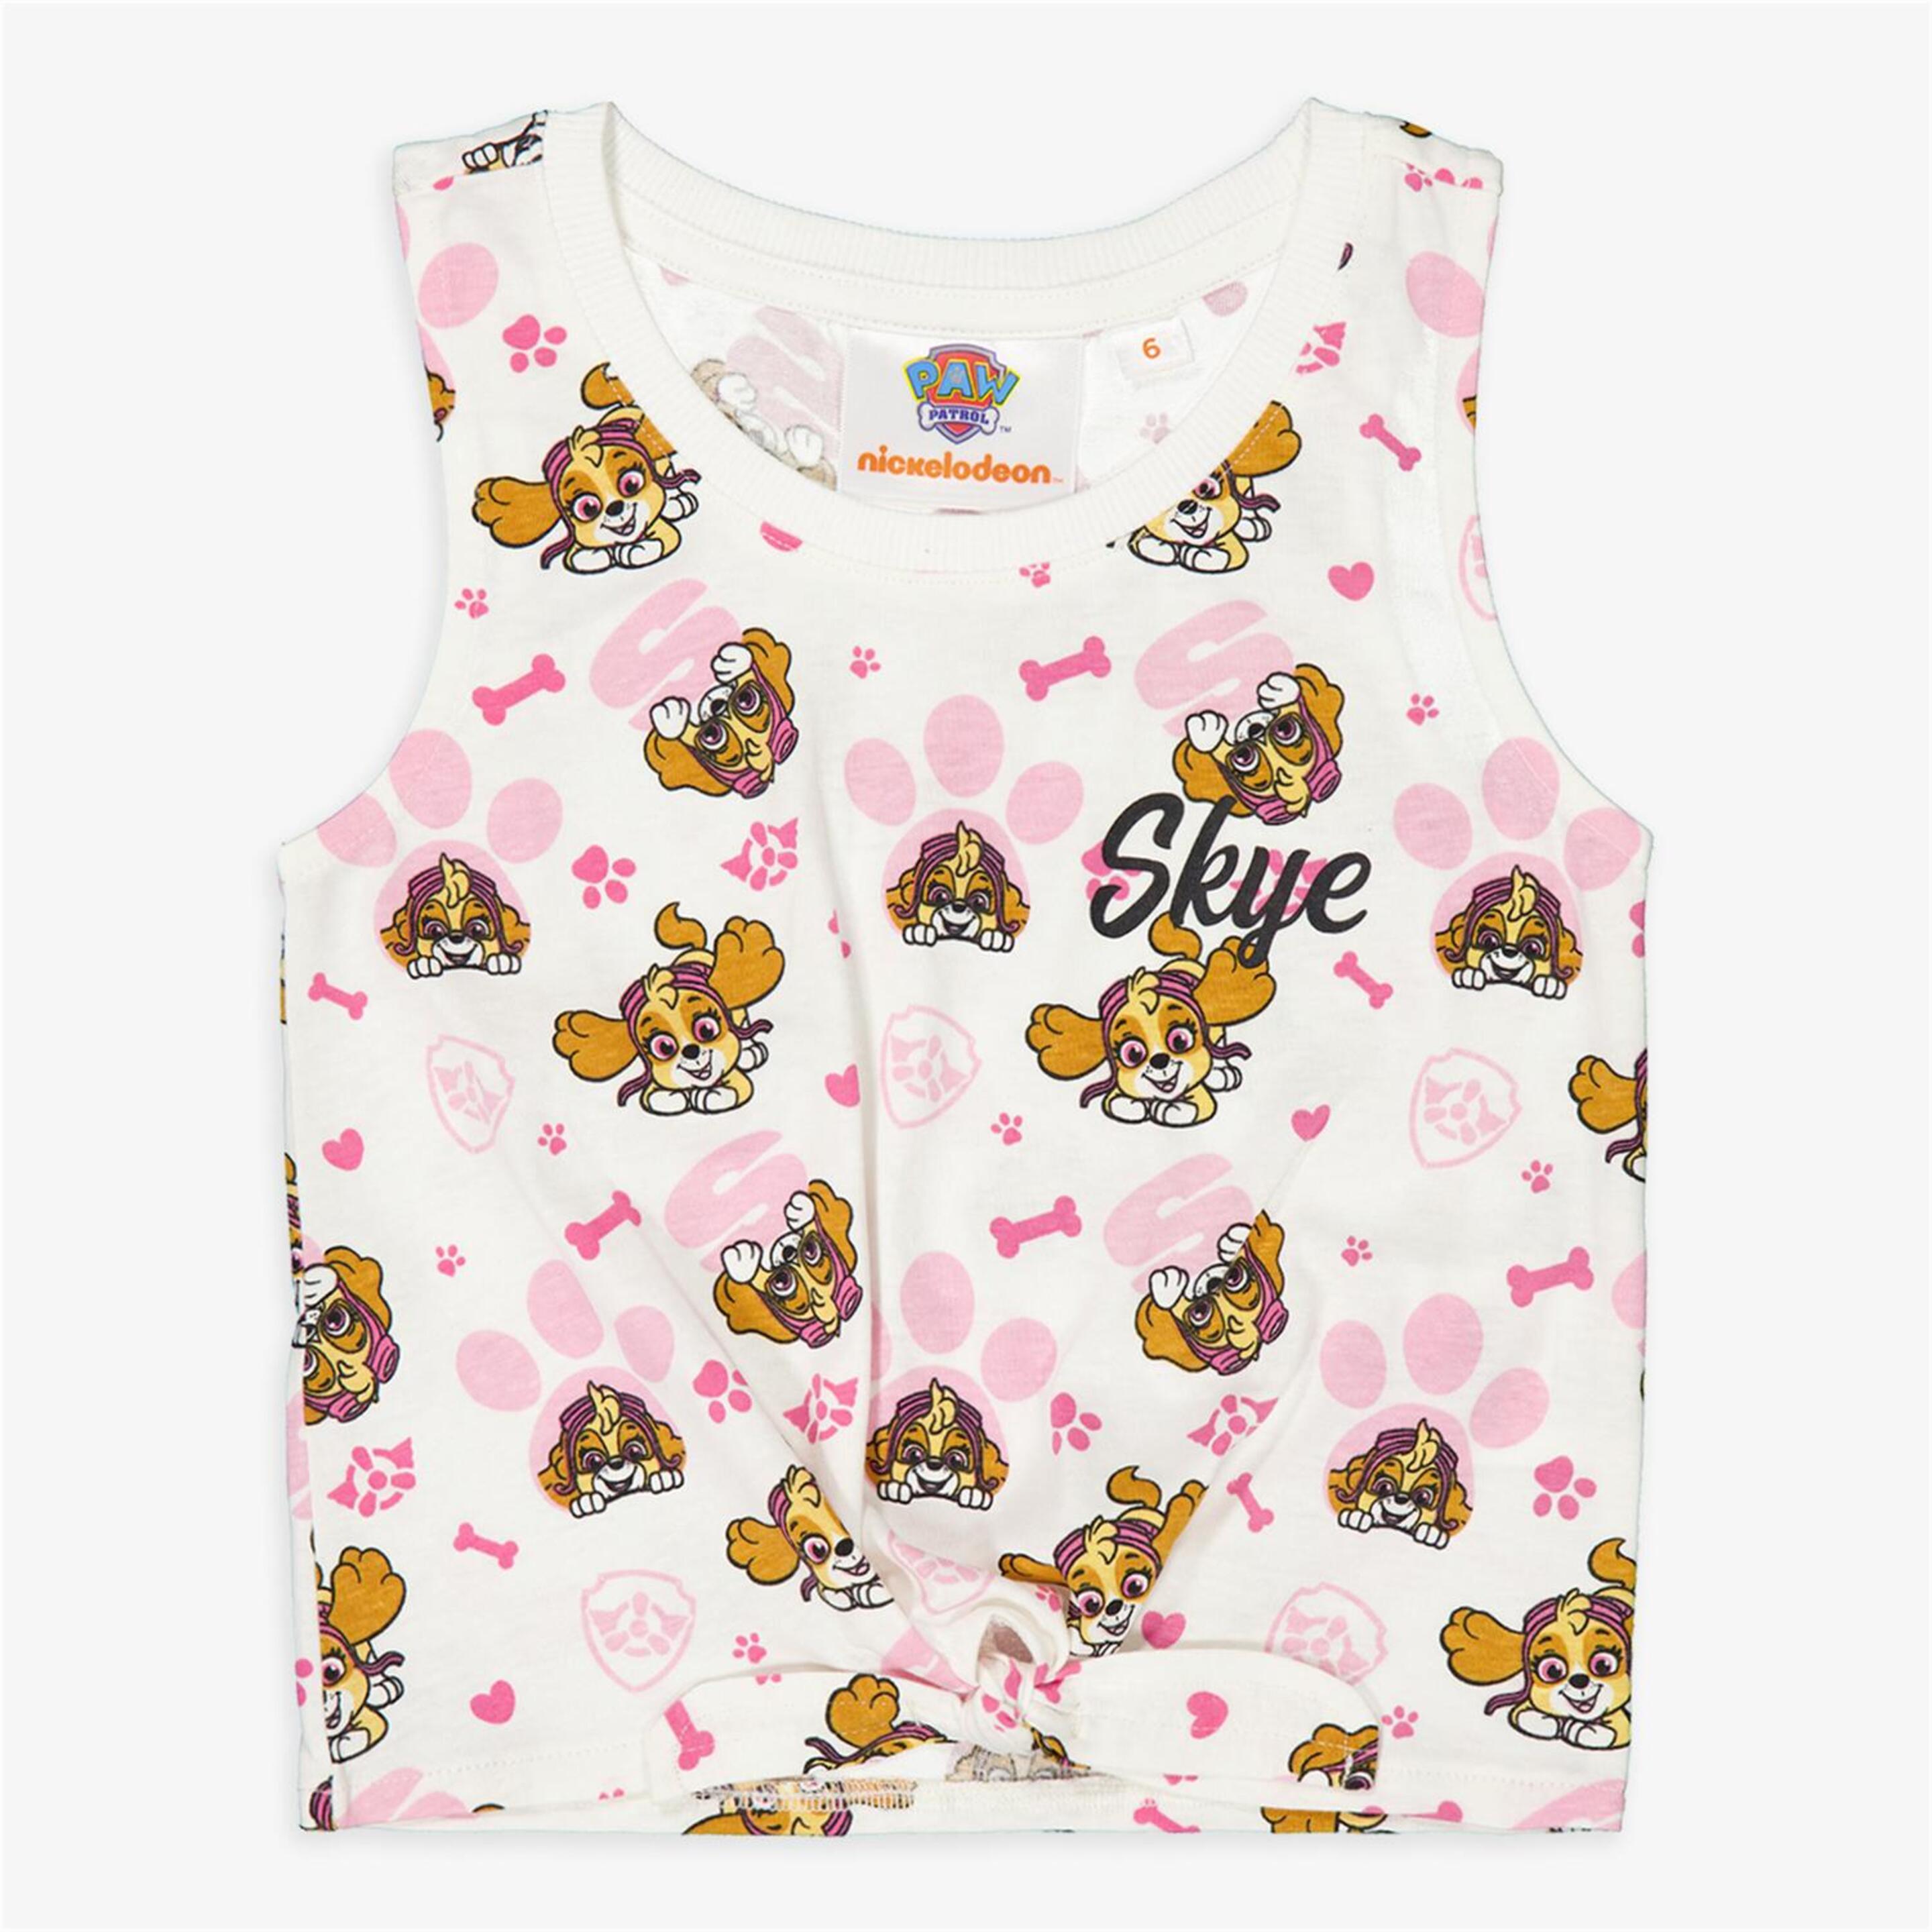 Camiseta Skye - multicolor - Camiseta Niña Patrulla Canina